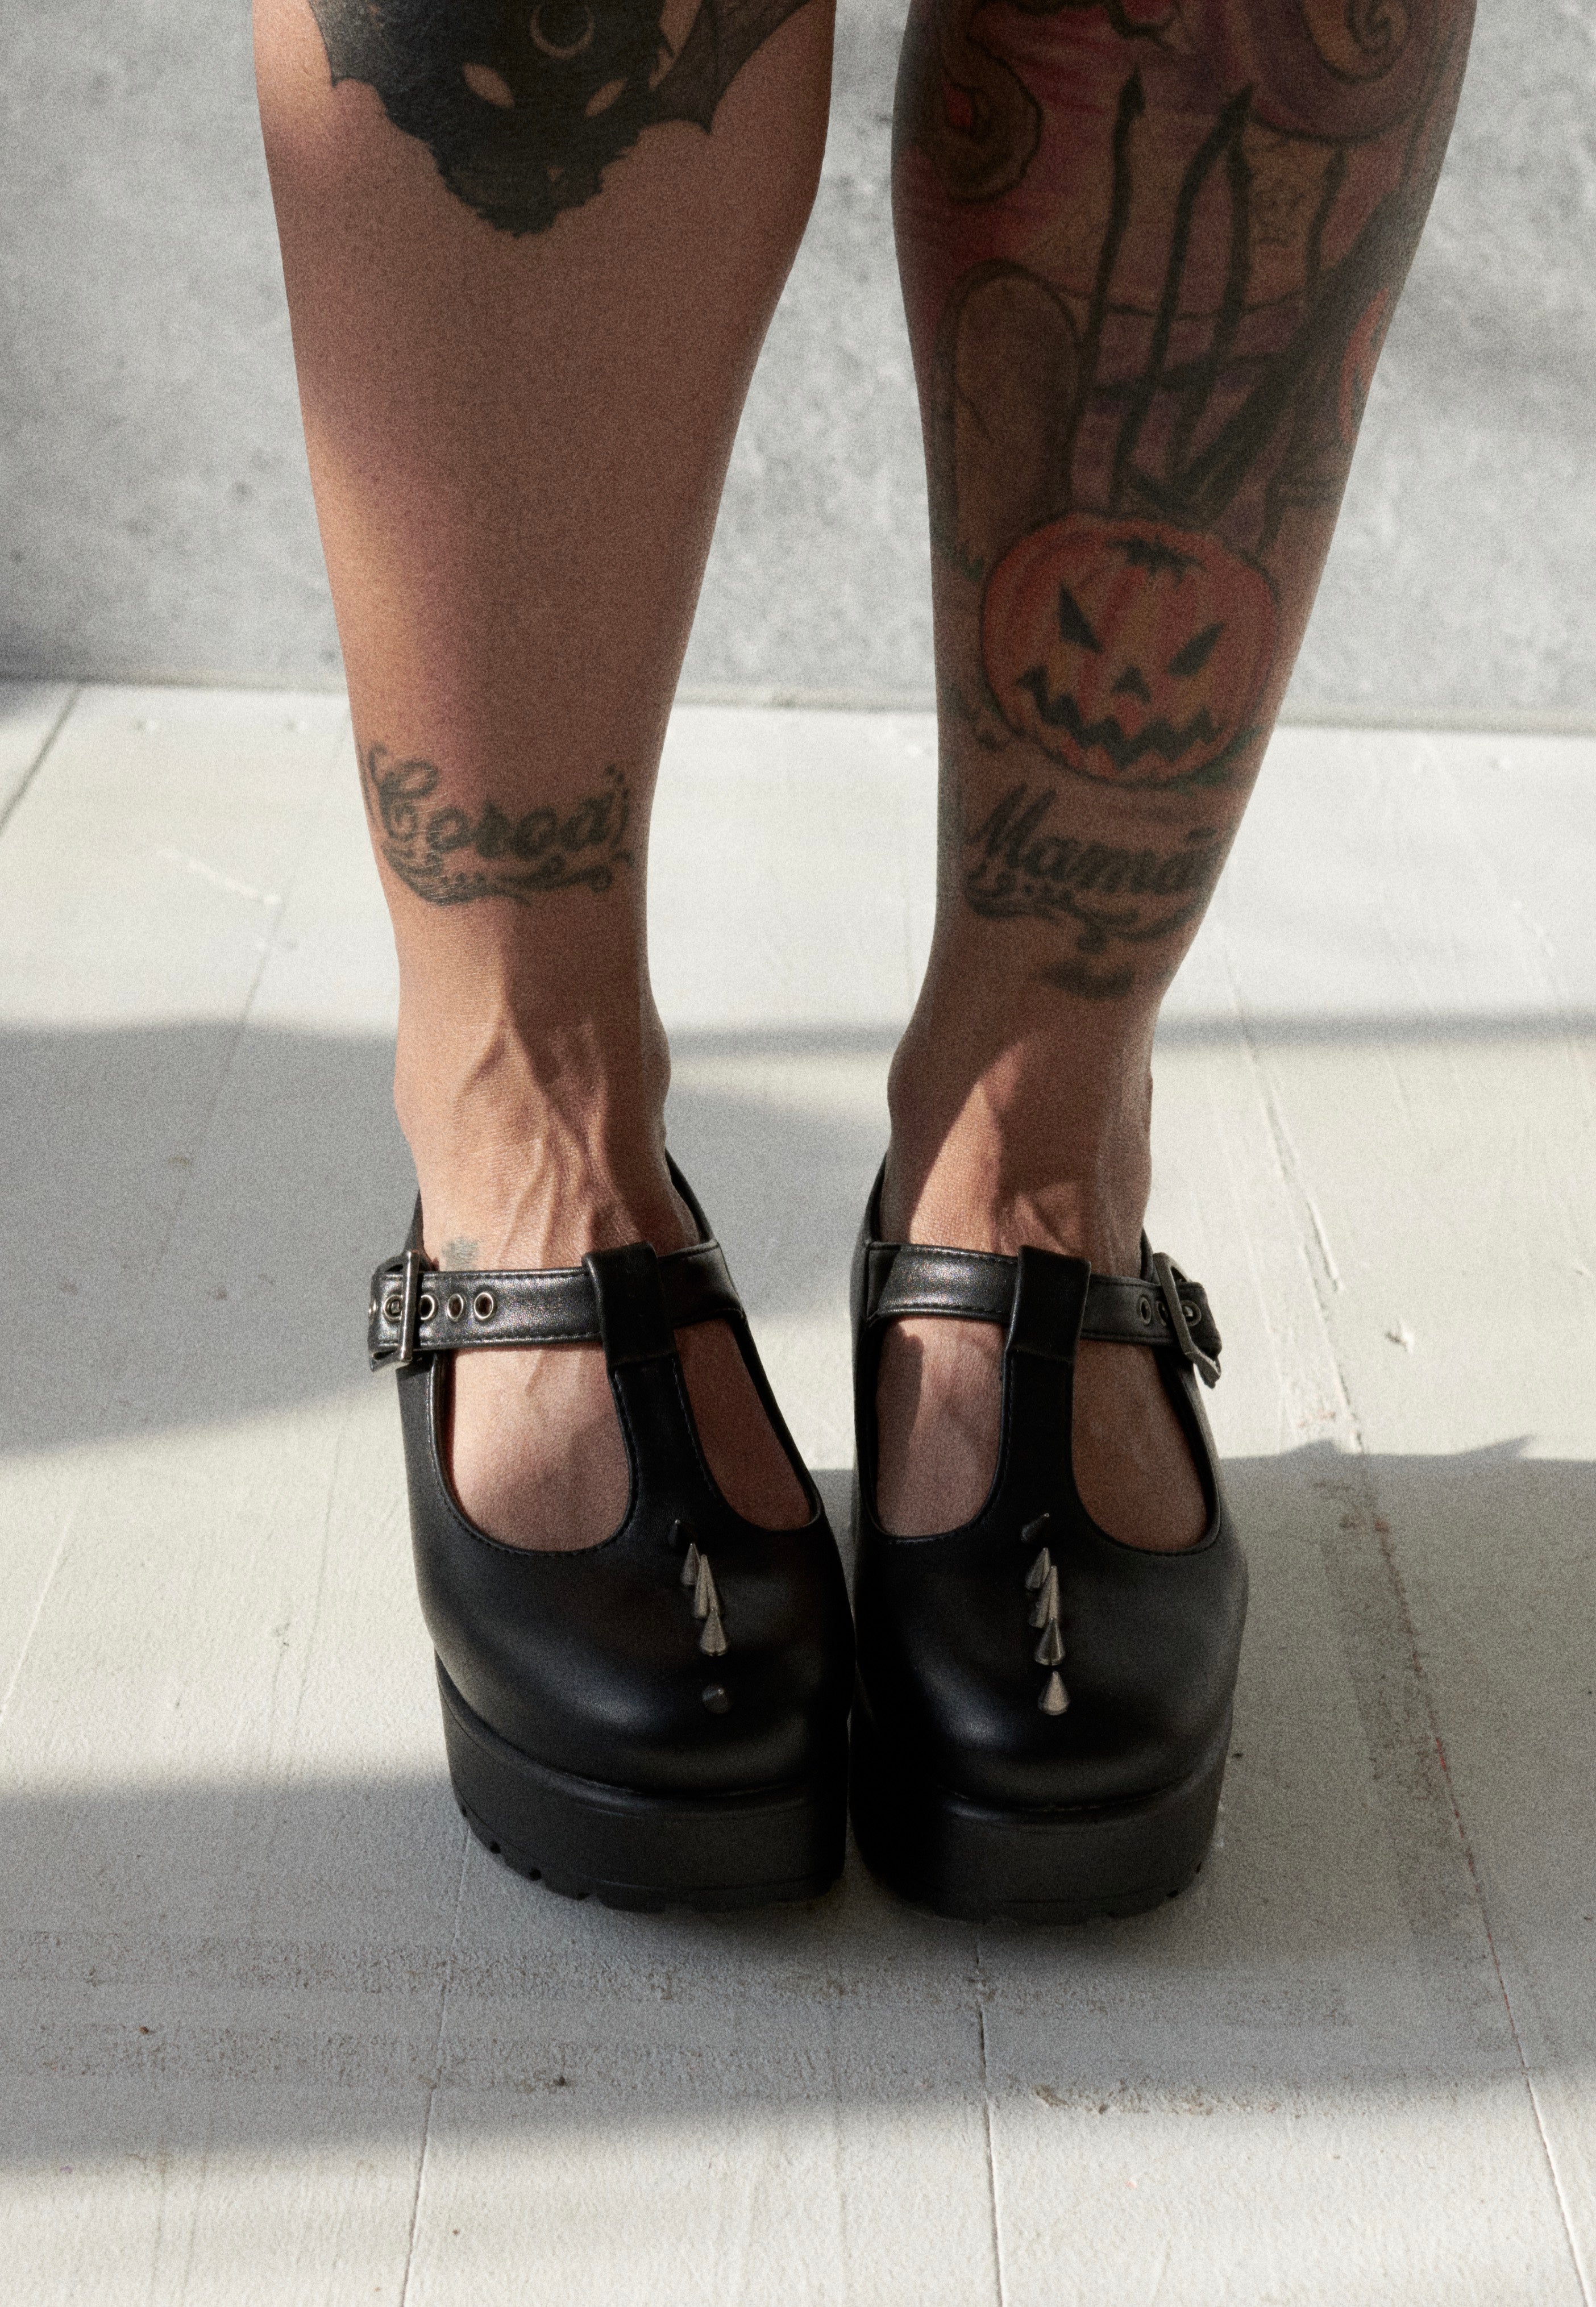 Koi Footwear - Sai Spike Mary Janes Deranged Gloom Edition Black - Girl Shoes